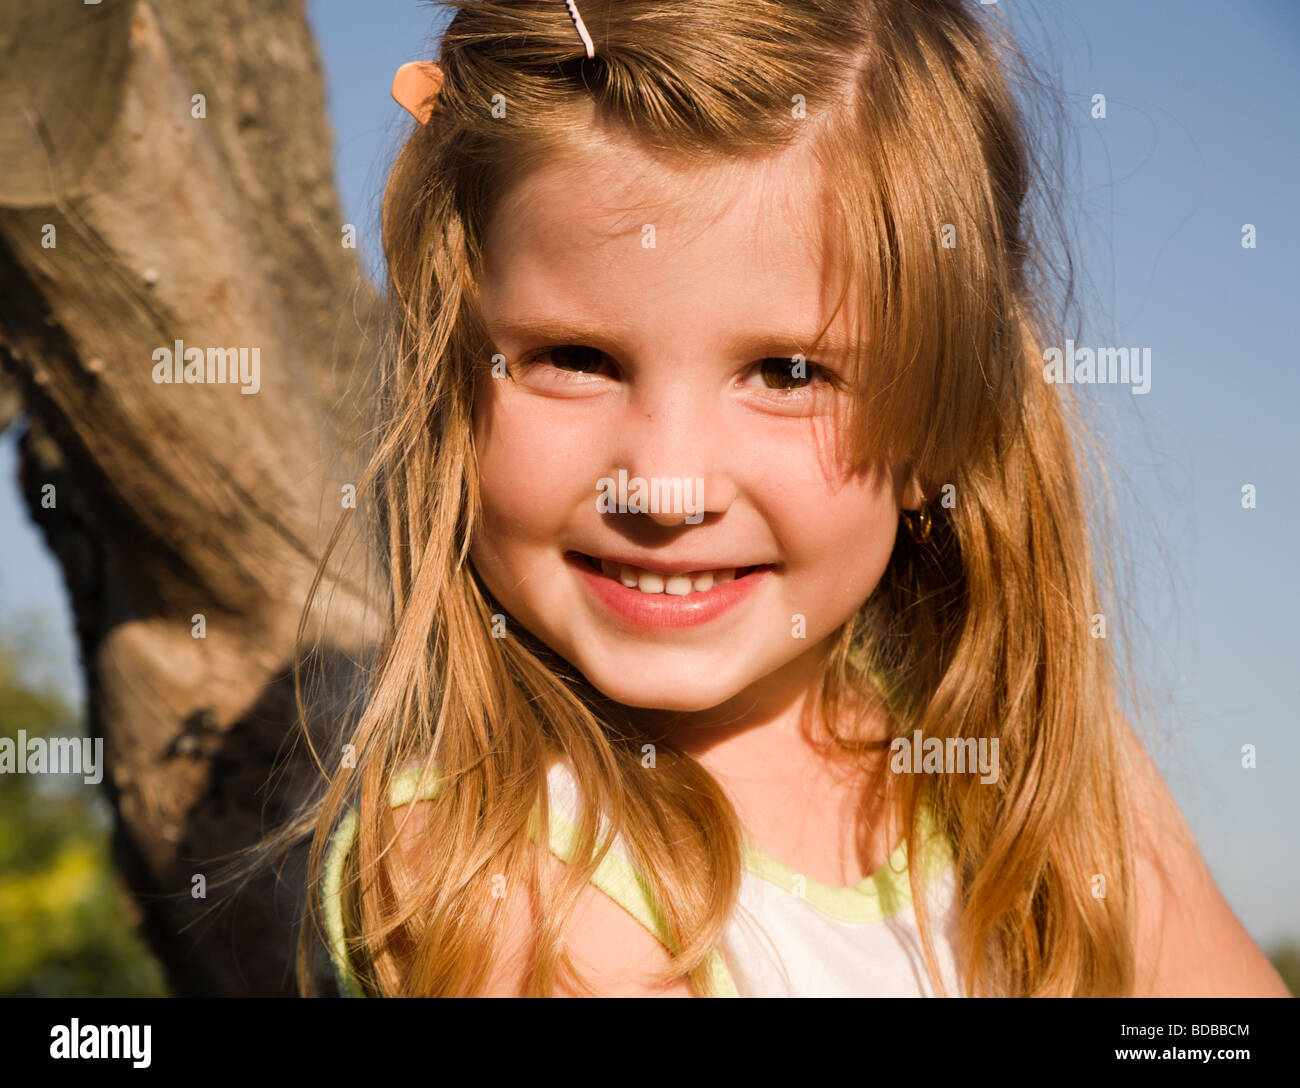 atractive smile of little girl Stock Photo